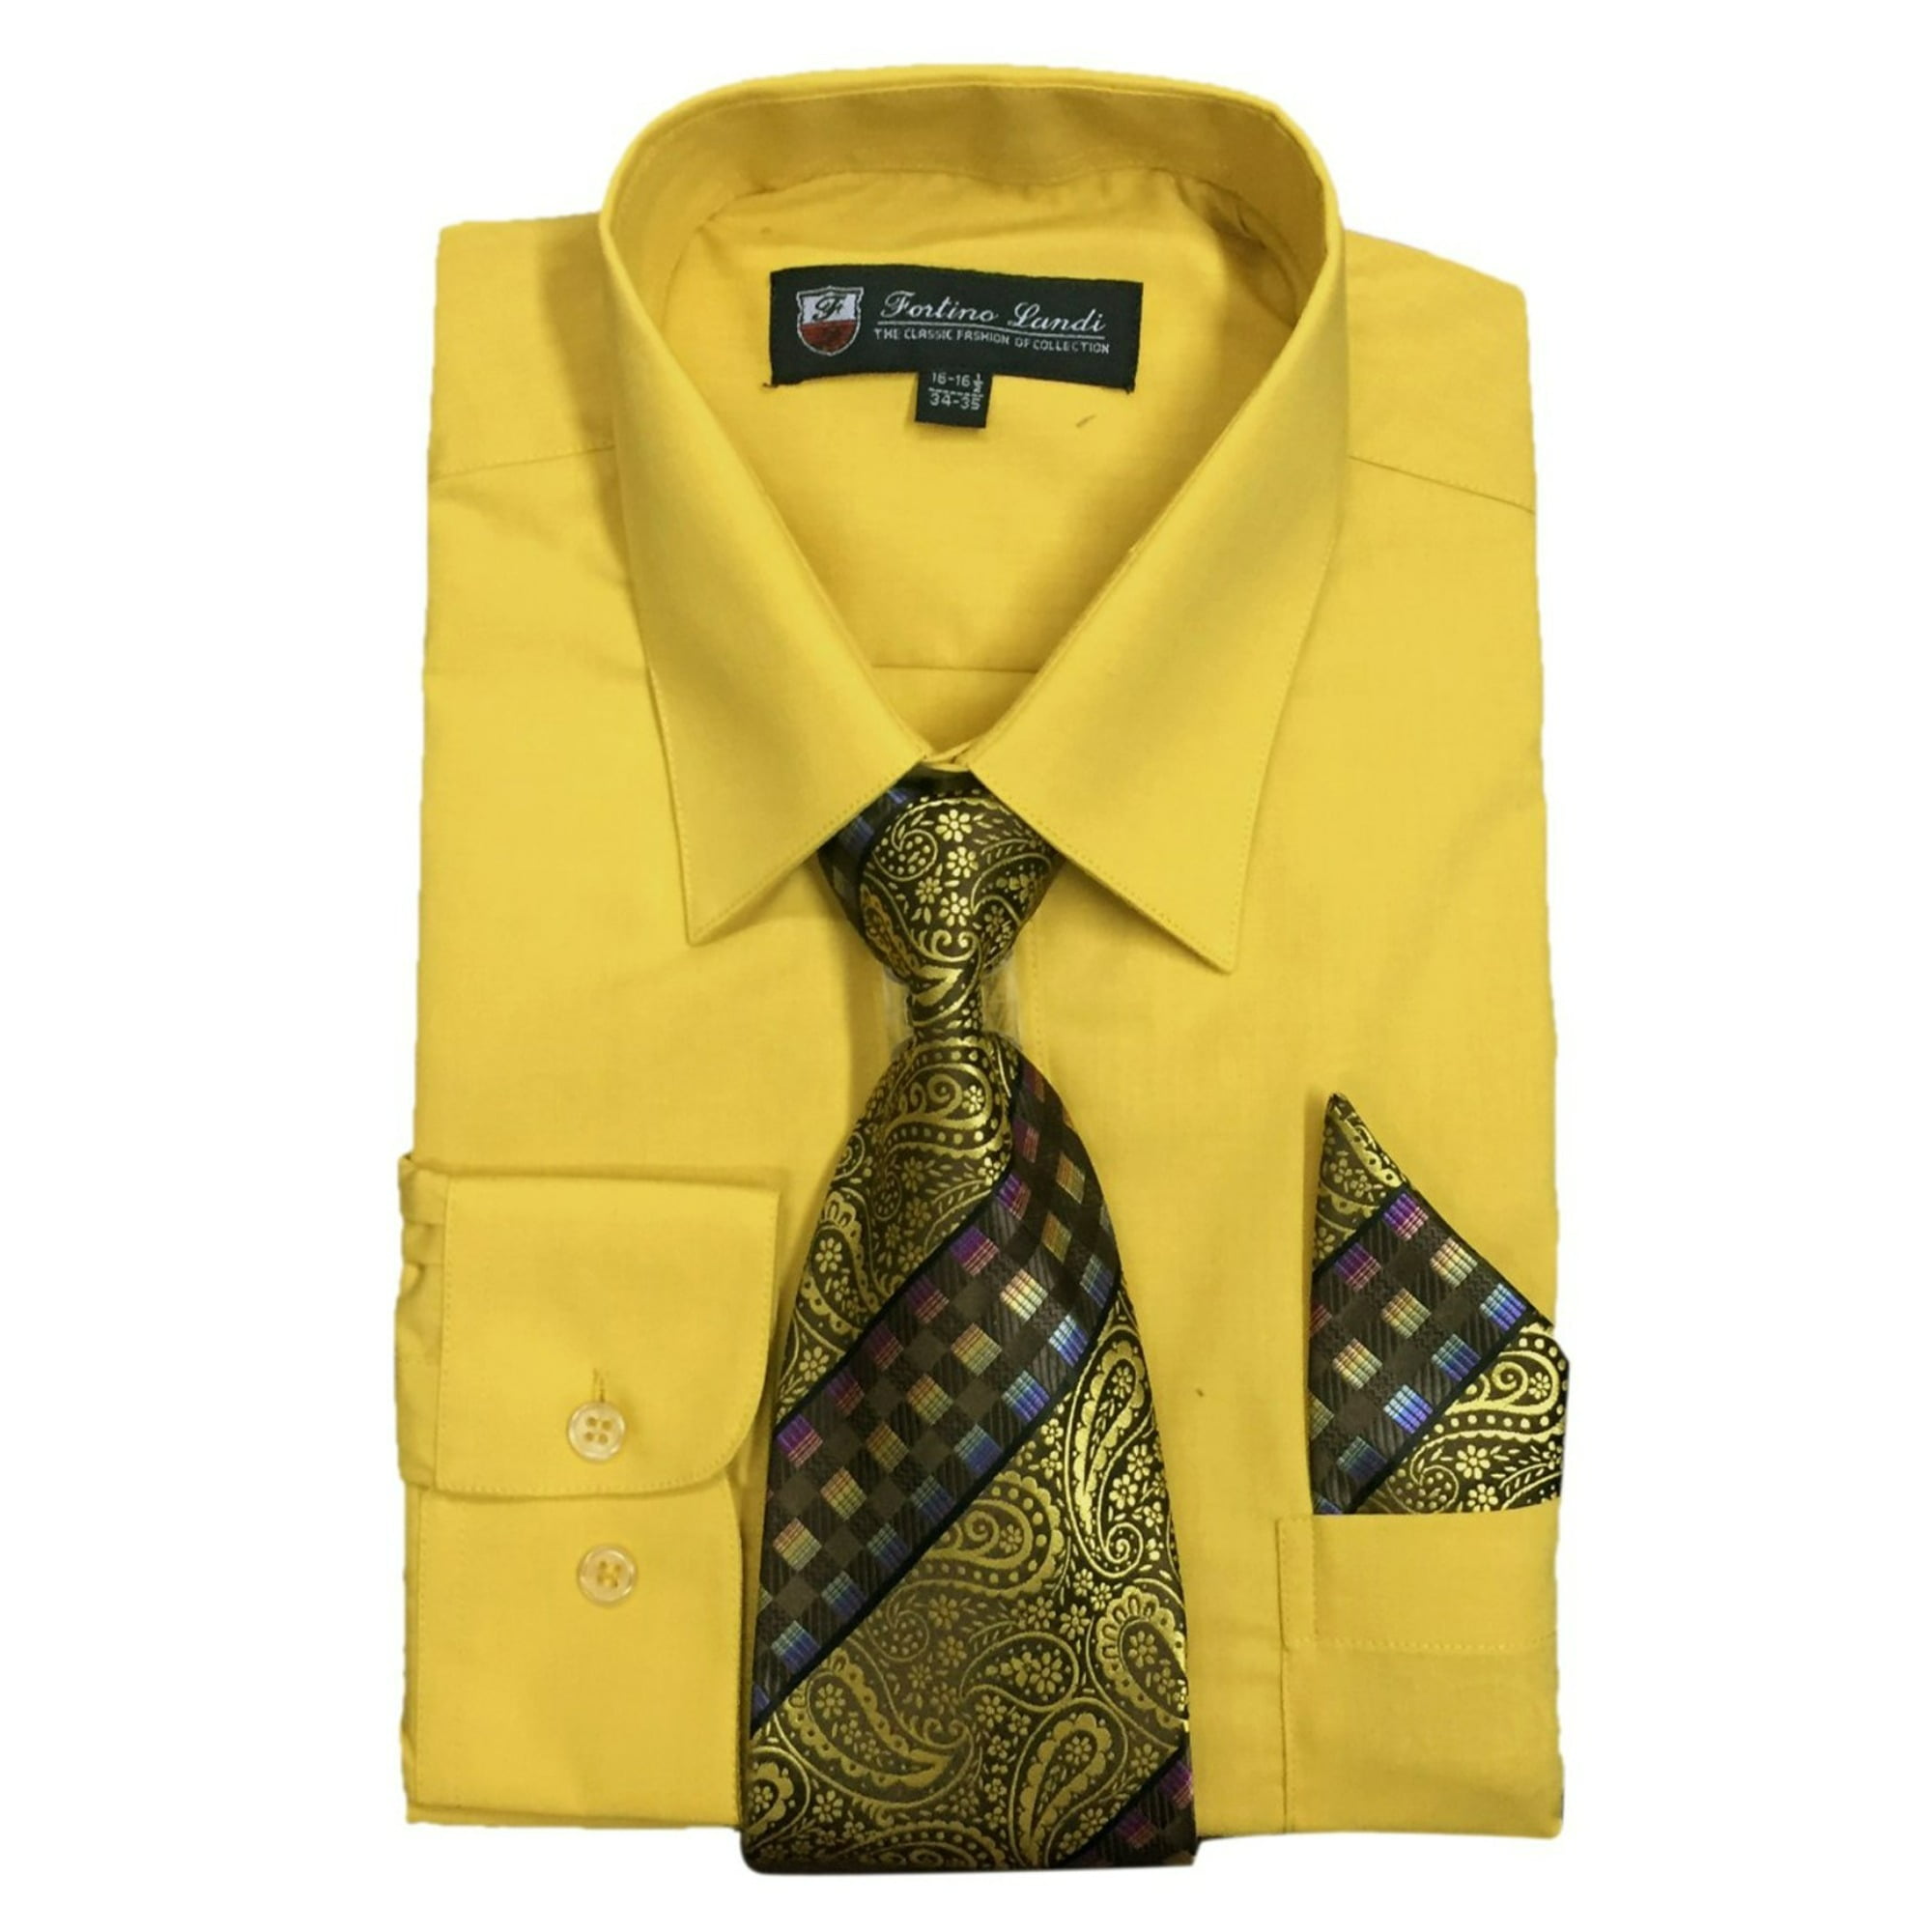 Fortino Landi Men's Long Sleeve Dress Shirt With Matching Tie And Handkerchief 